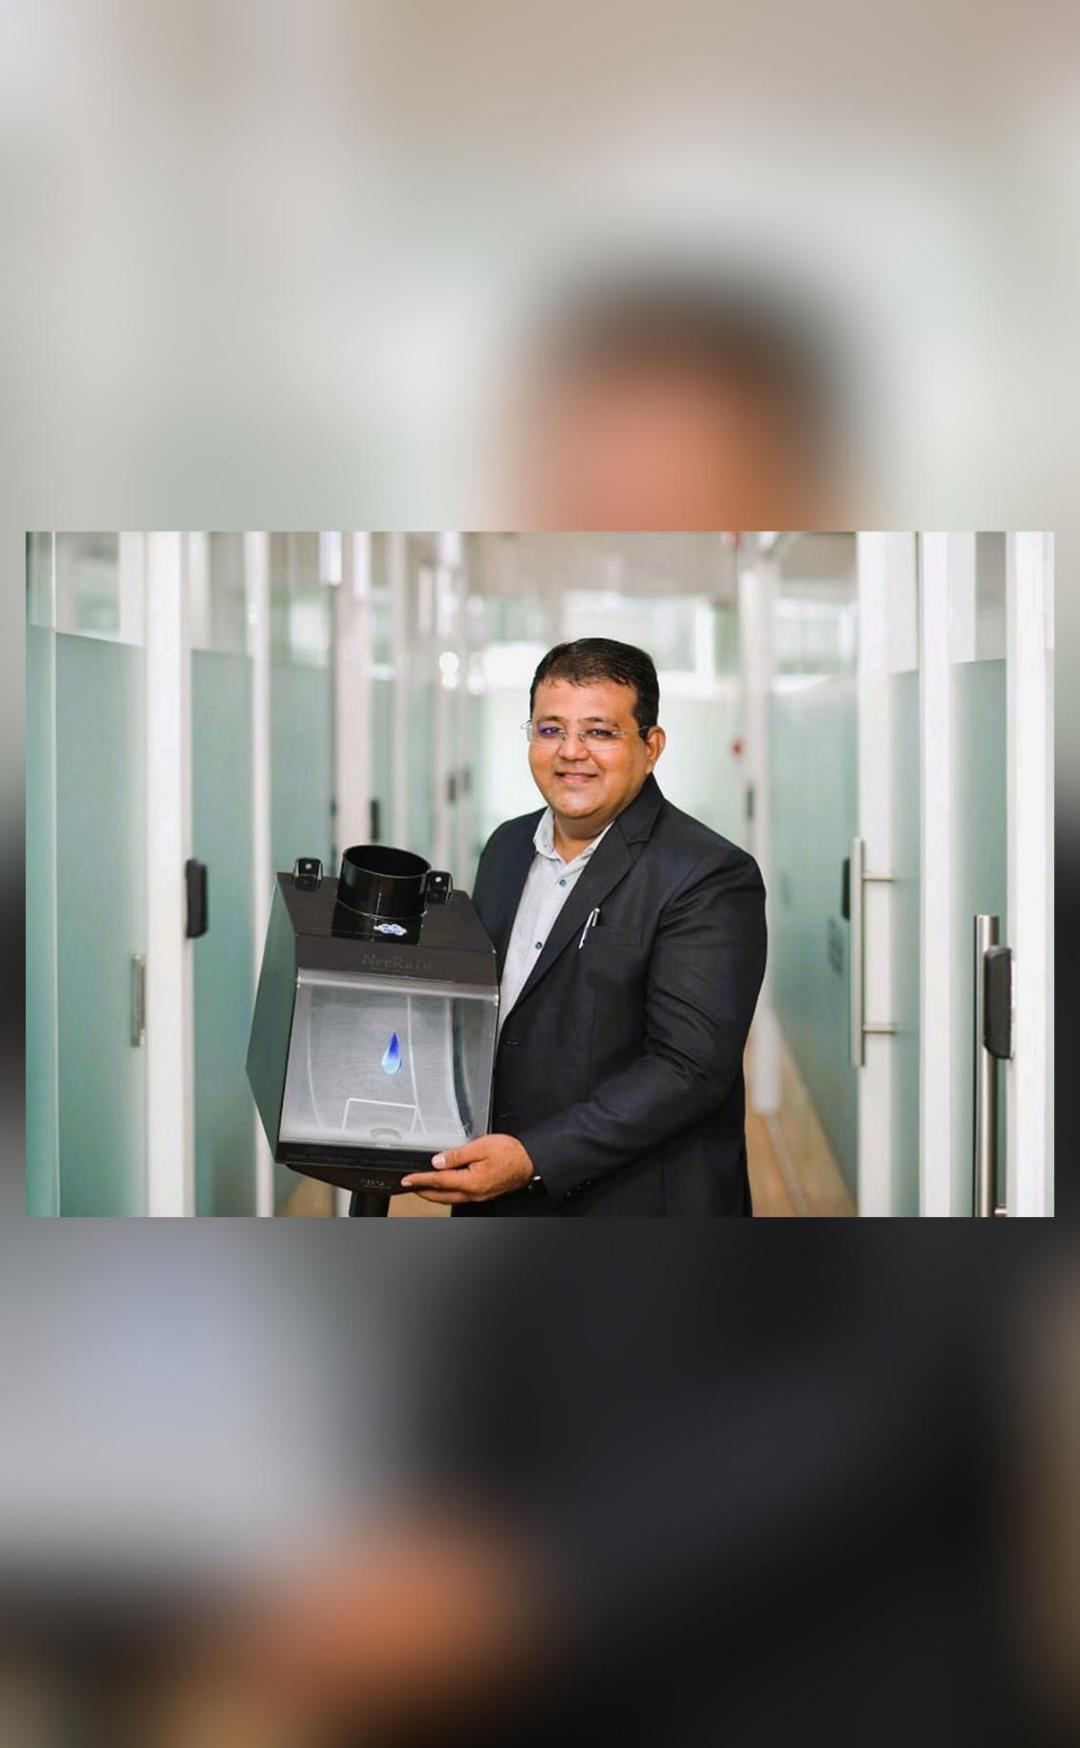 This rainwater harvesting startup clocks ₹2 crore in revenues 